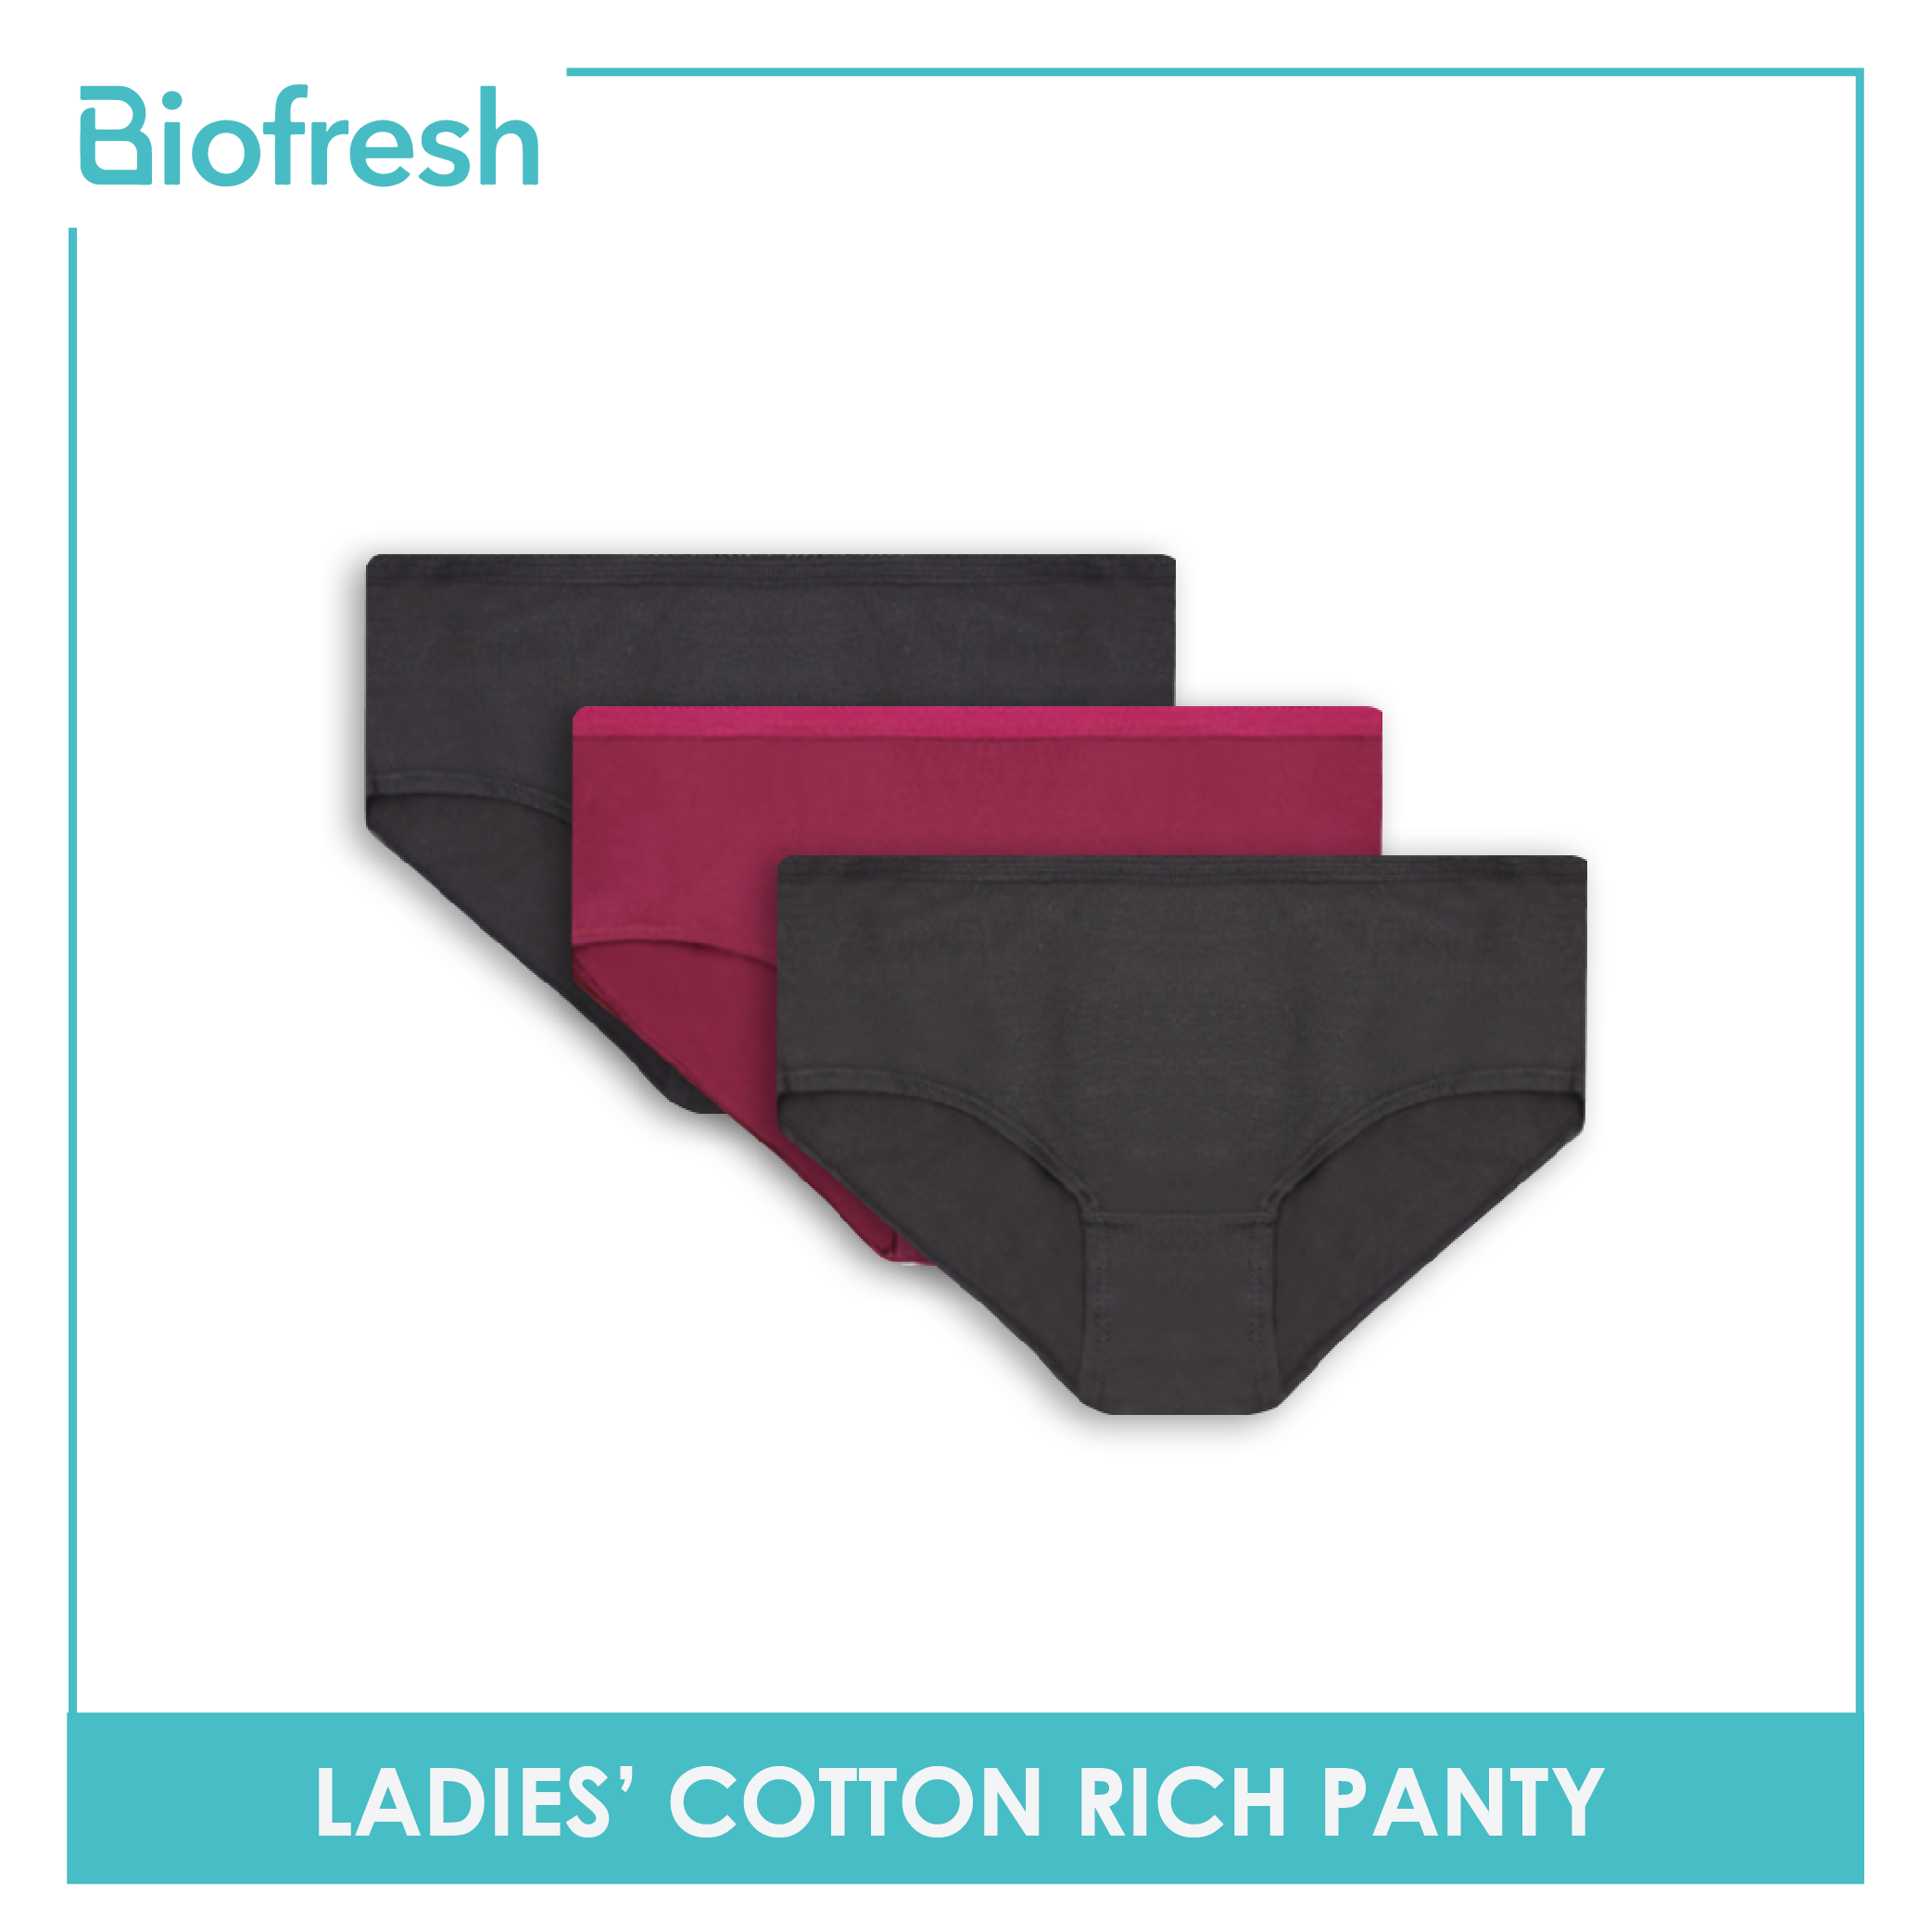 Biofresh Ladies' Antimicrobial Cotton Boyleg Panty (3 pcs/pack